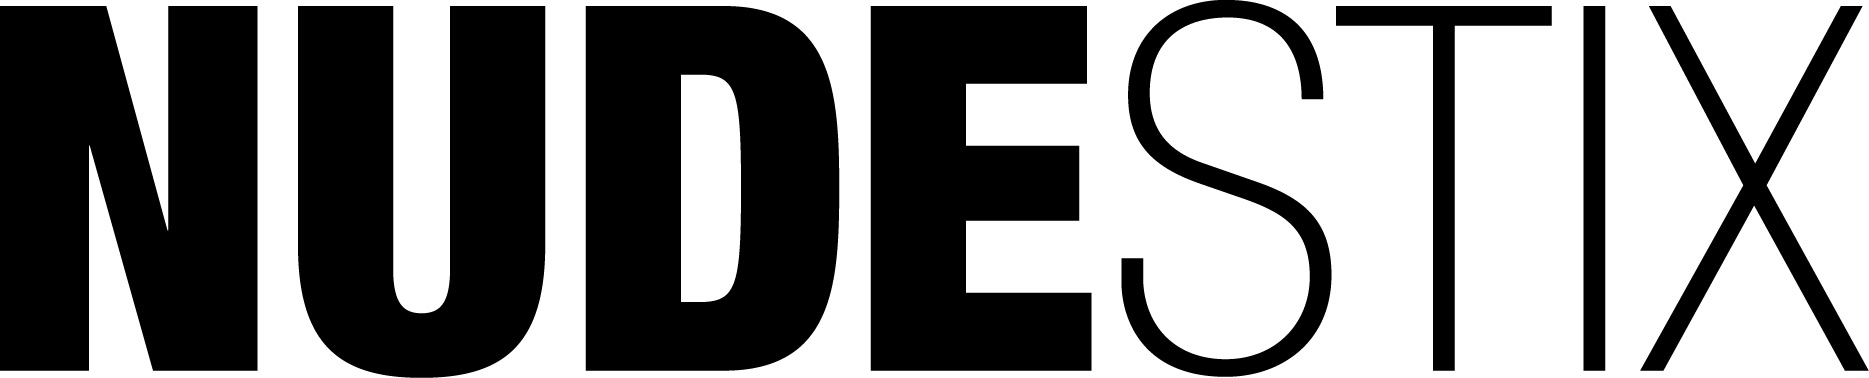 Nudestix Logo